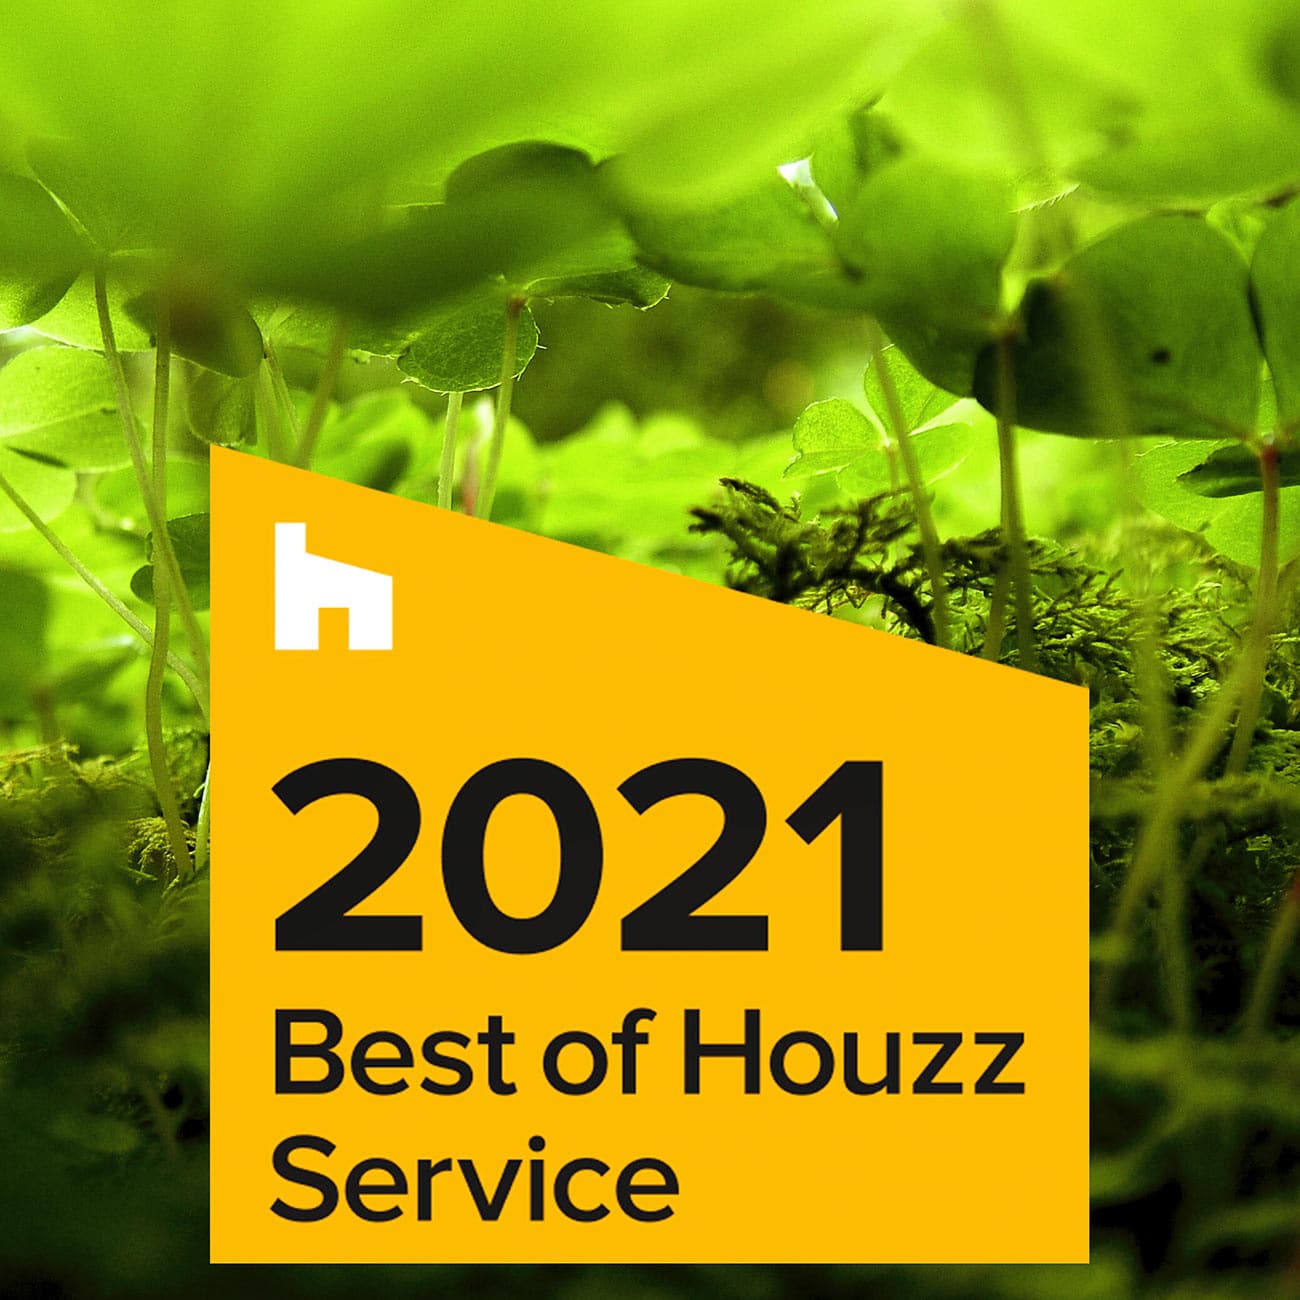 Best of houzz 2021 - Atelier Naudier